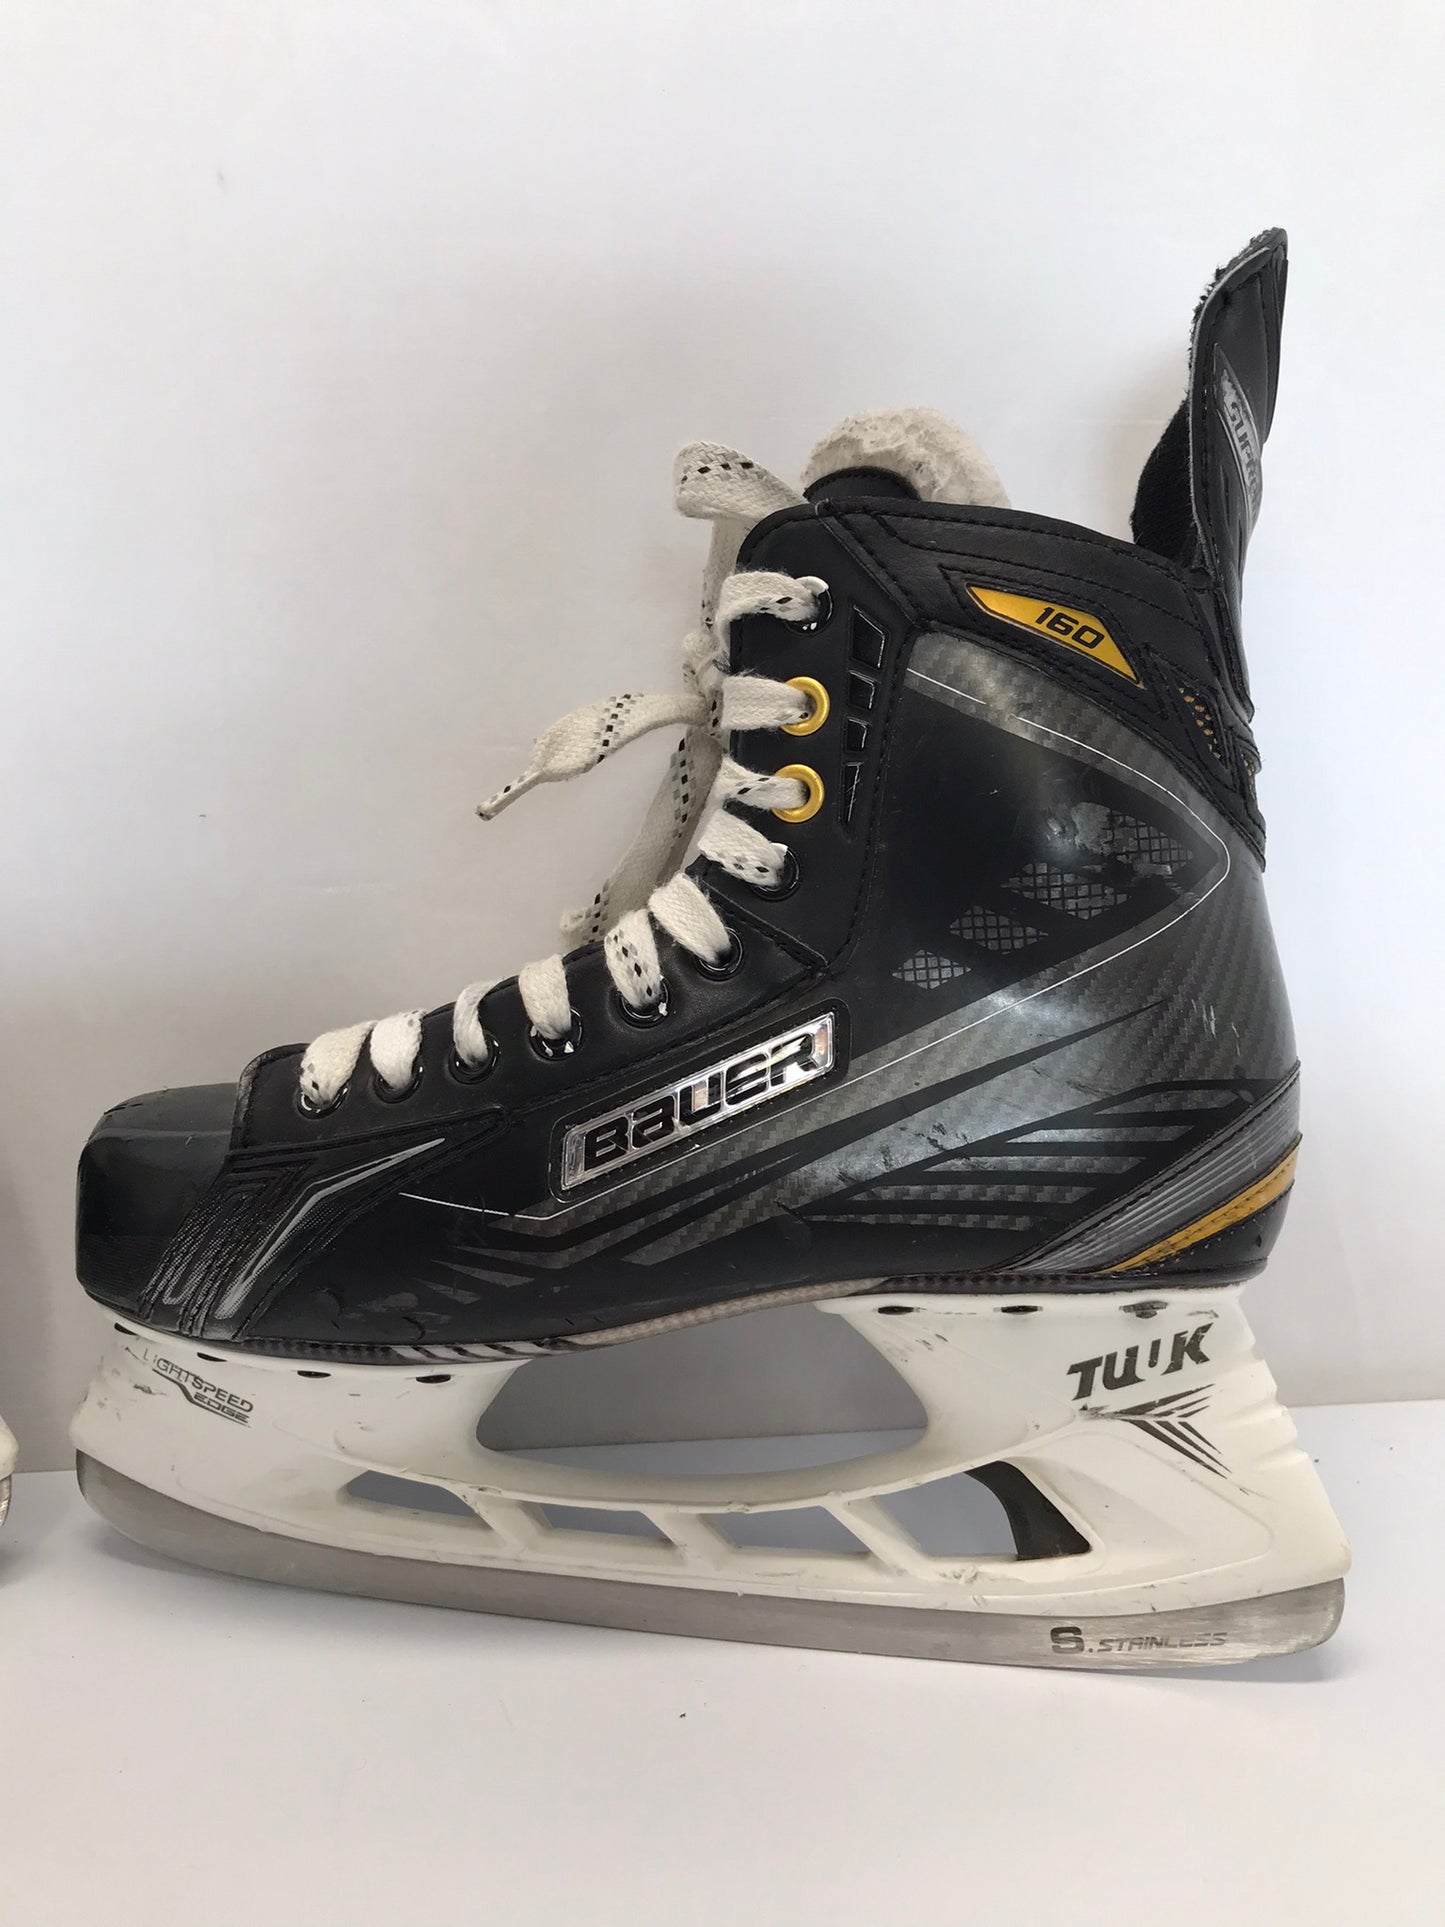 Hockey Skates Men's Size 9.5 Shoe Size  Bauer Supreme 160  Minor Wear